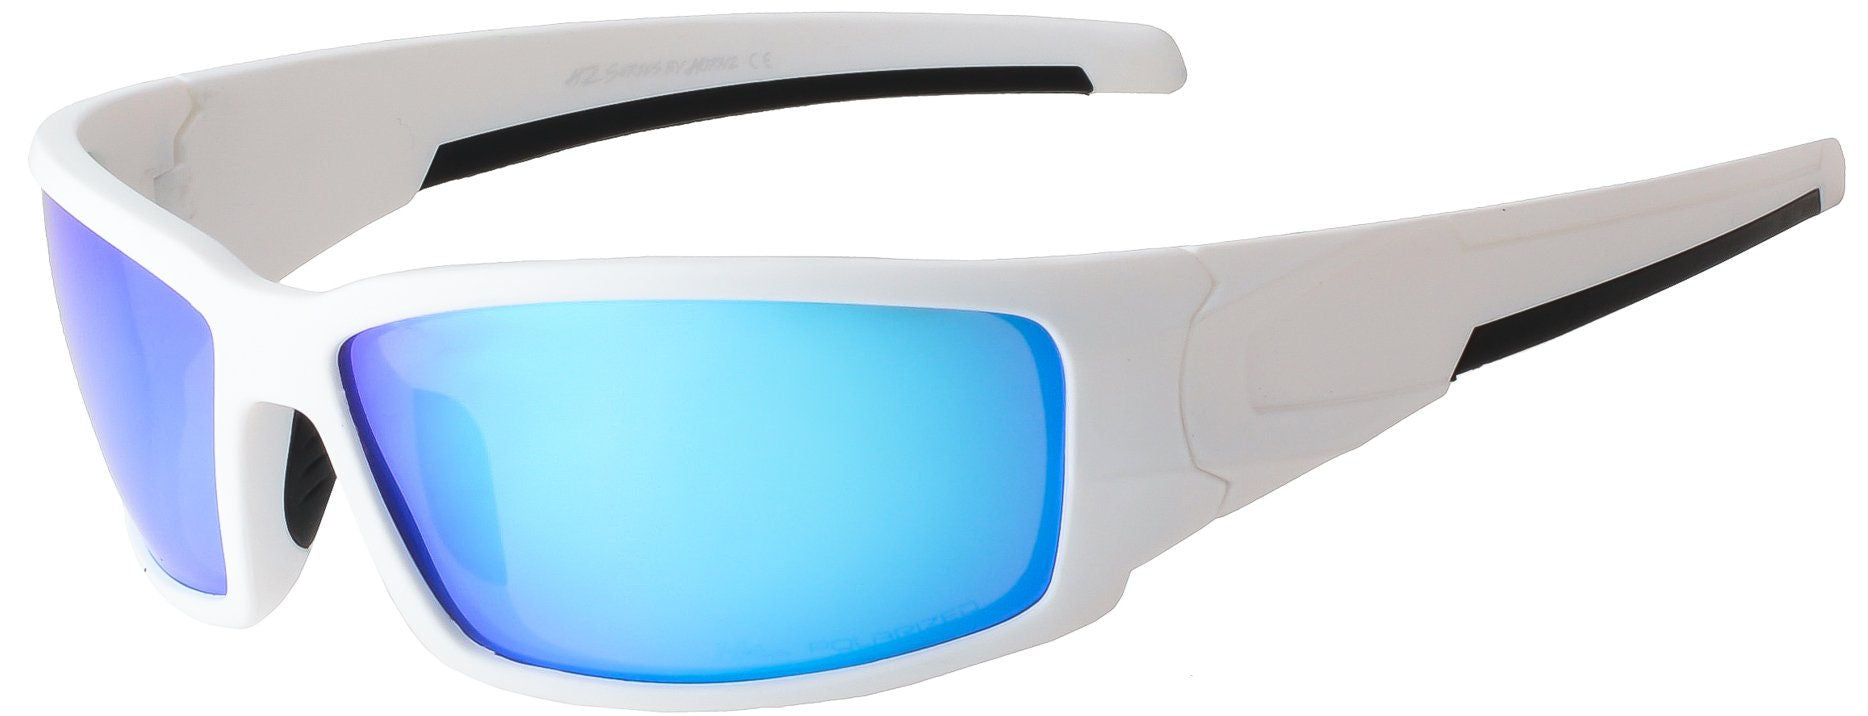 Main image: Polarized Sunglasses for Men - Premium Sport Sunglasses - HZ Series Aquabull - White Frame - Ice Blue Mirror Lens